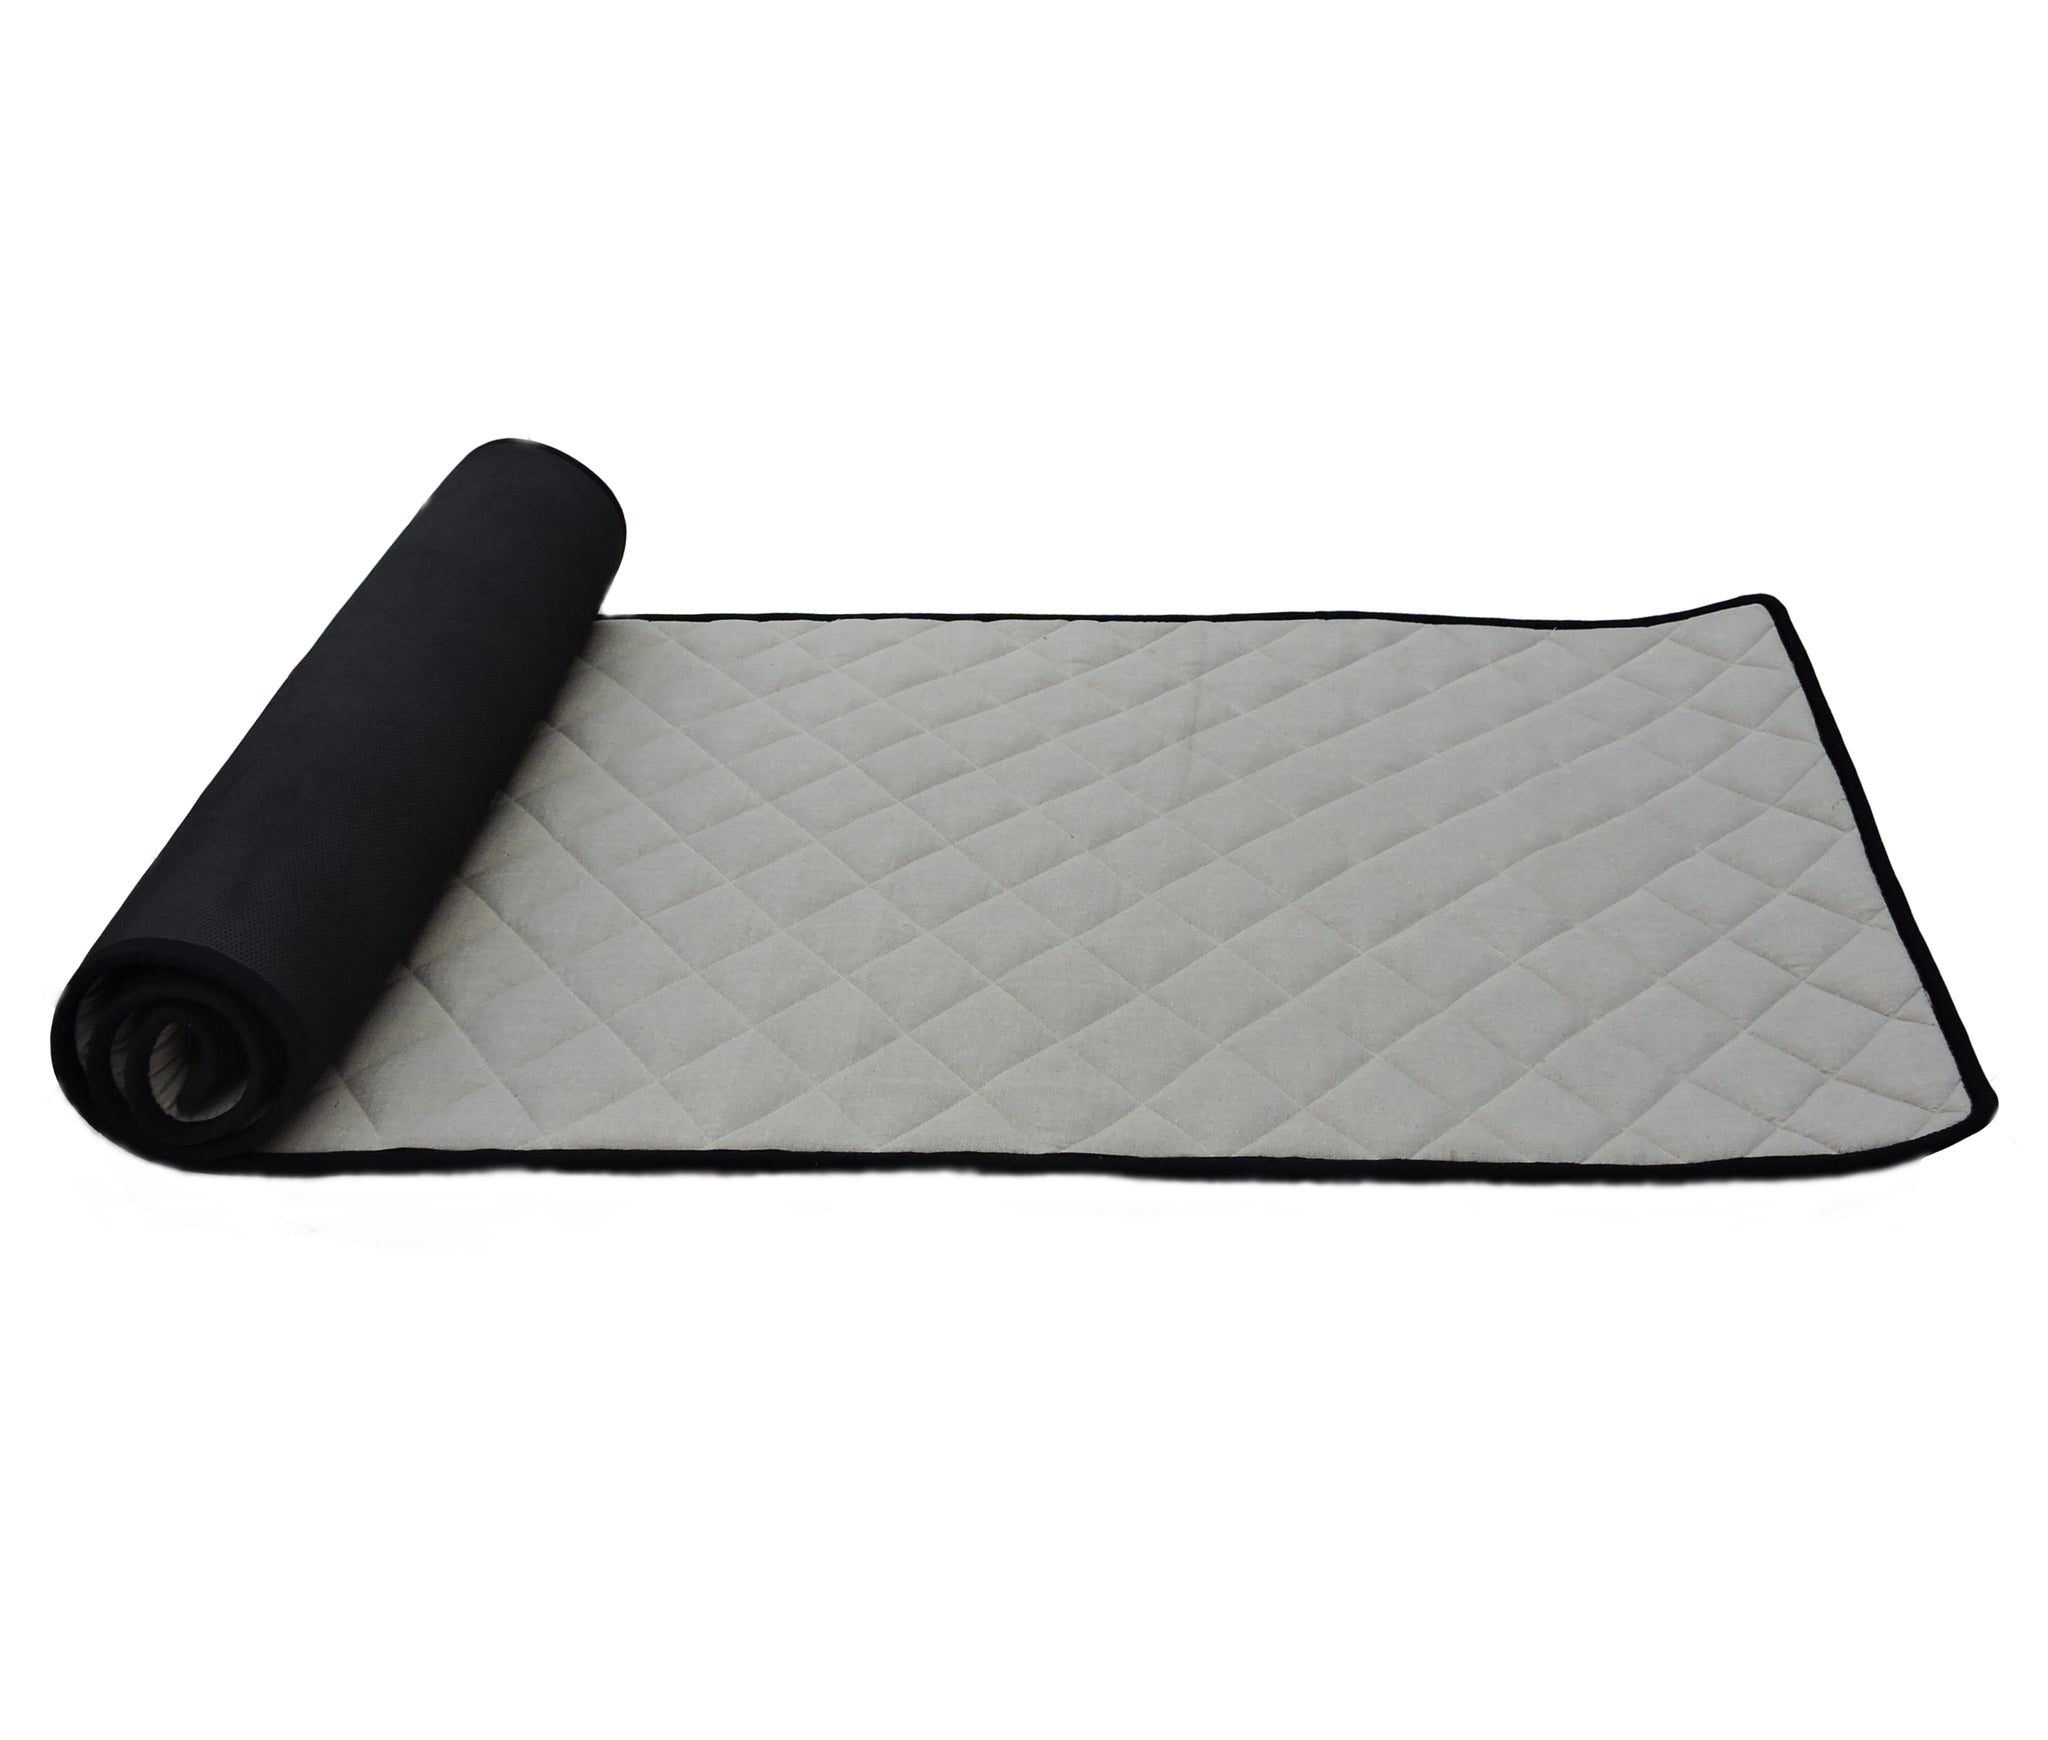 Cotton Anti-Skid Yoga Mat With Rubber Backing - Black – Kanyoga